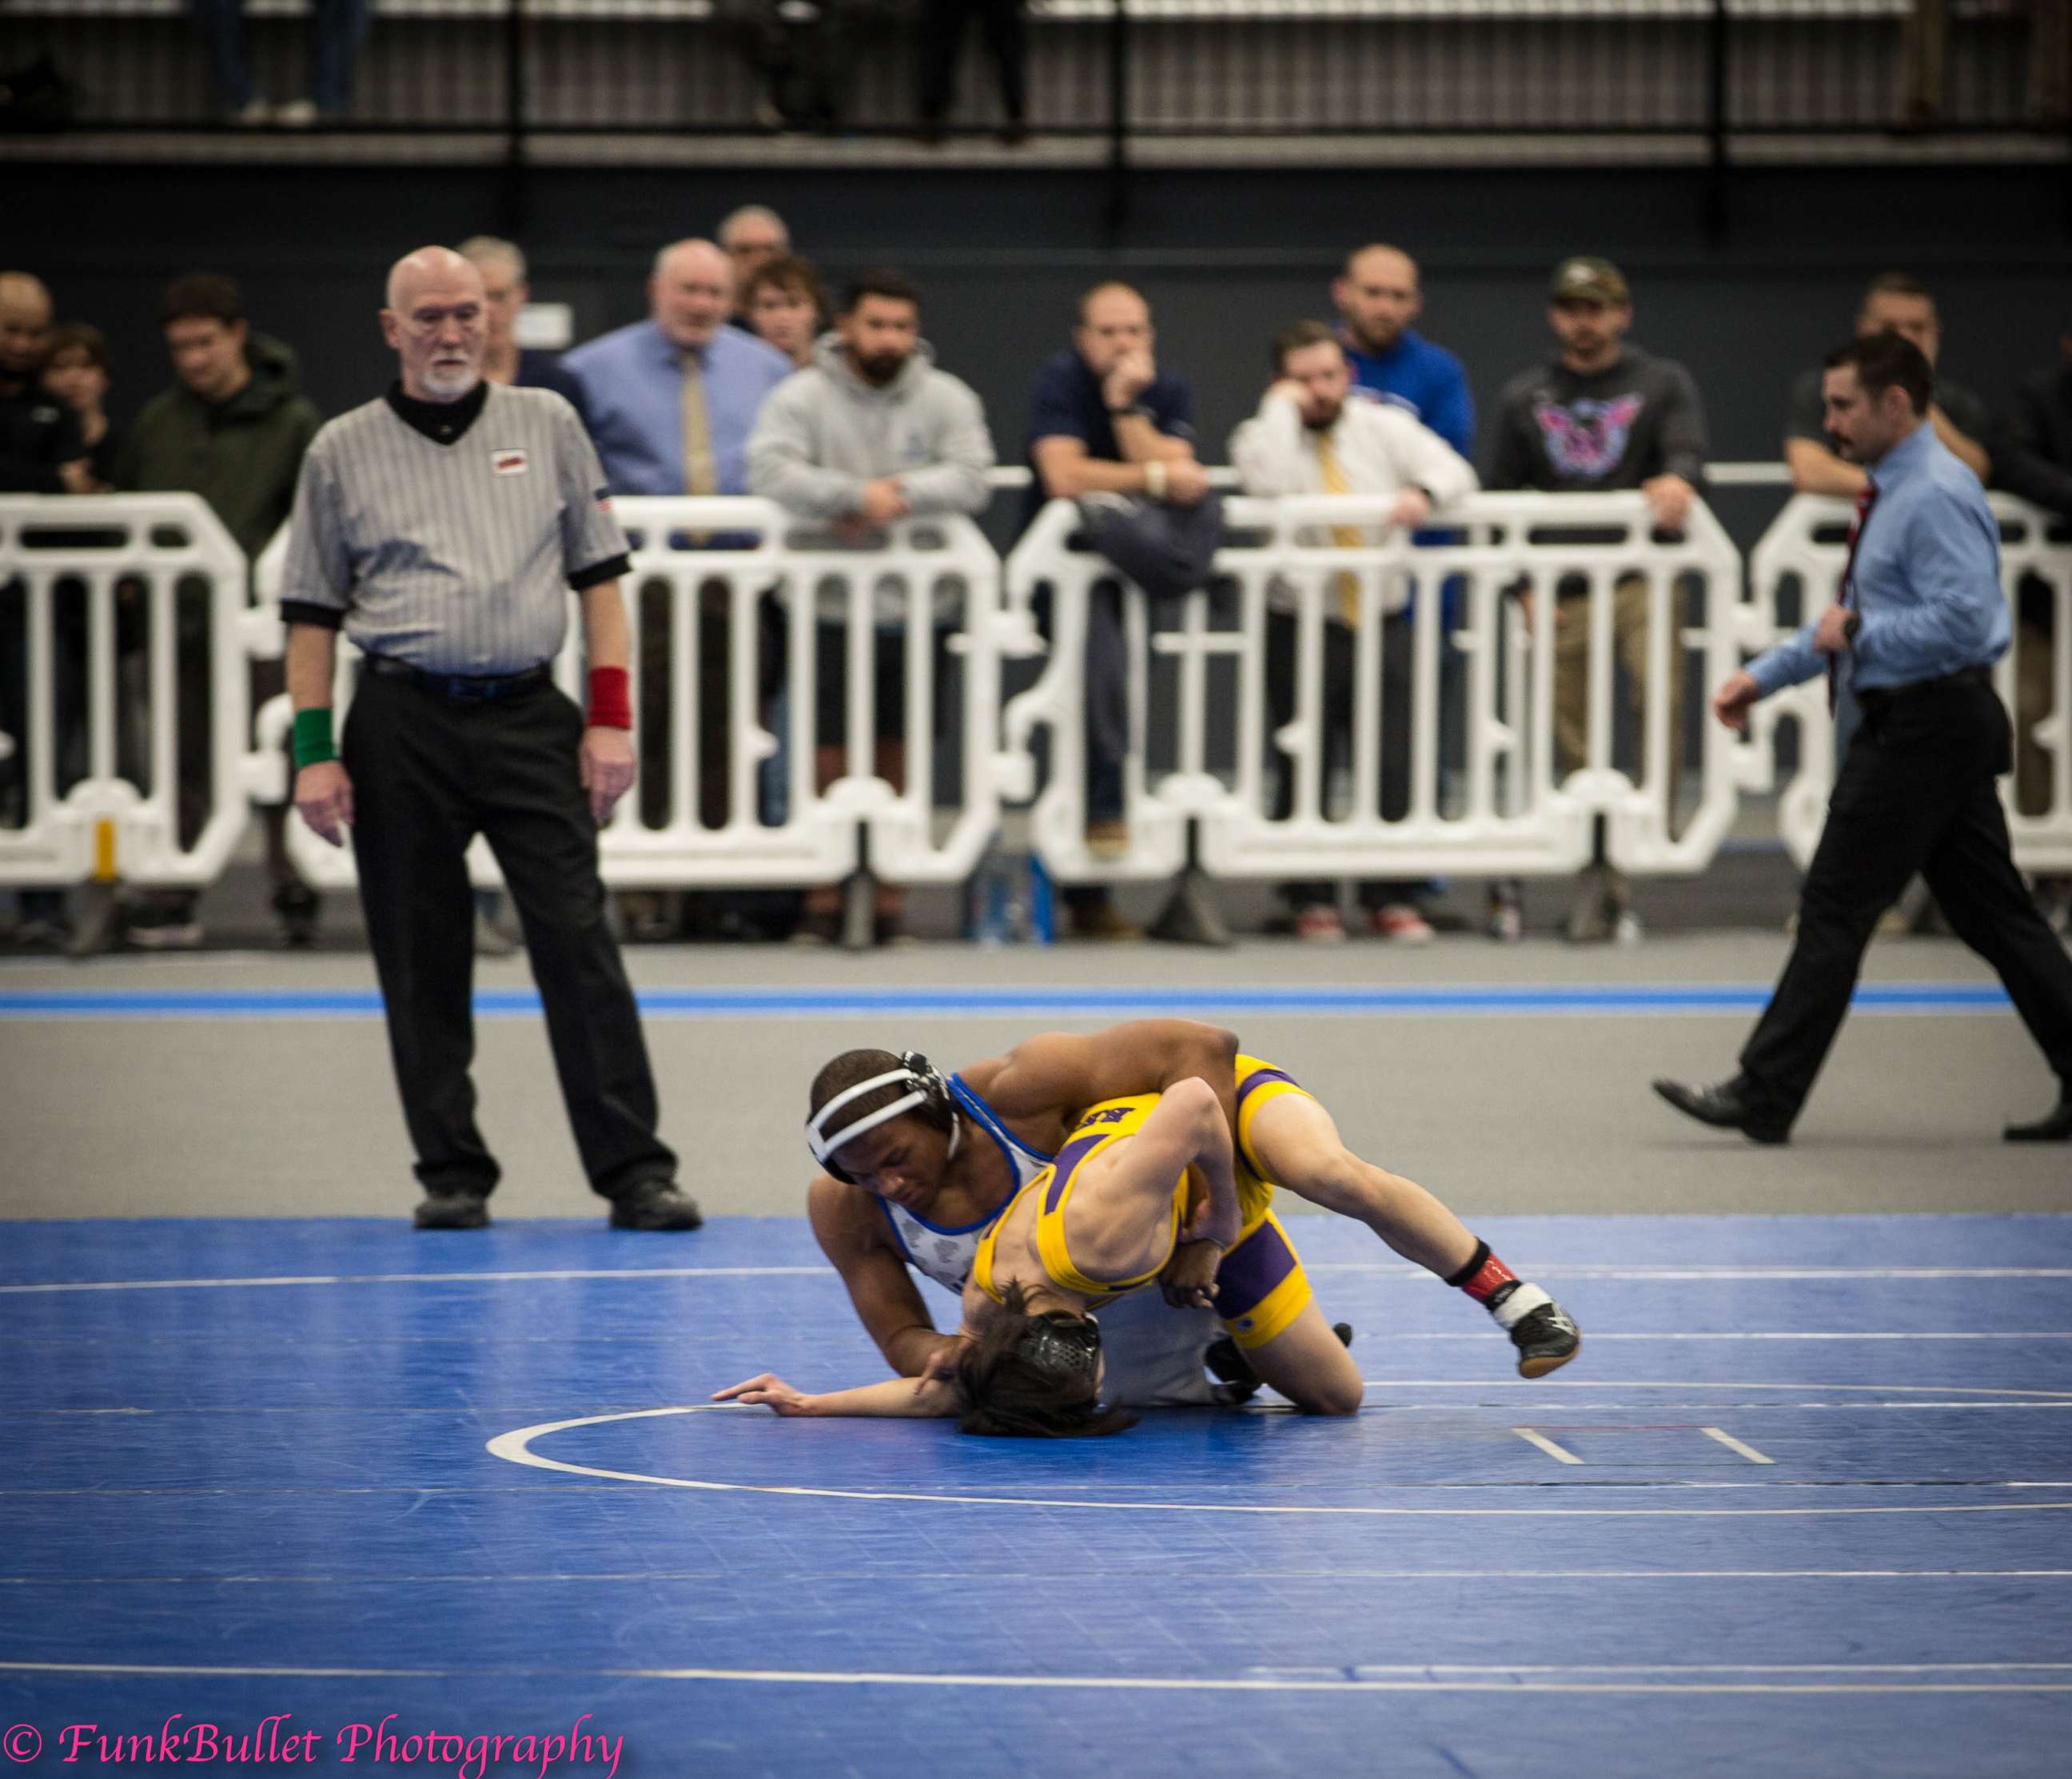 PHOTO: Adonis Lattimore wrestles an opponent during a high school match.